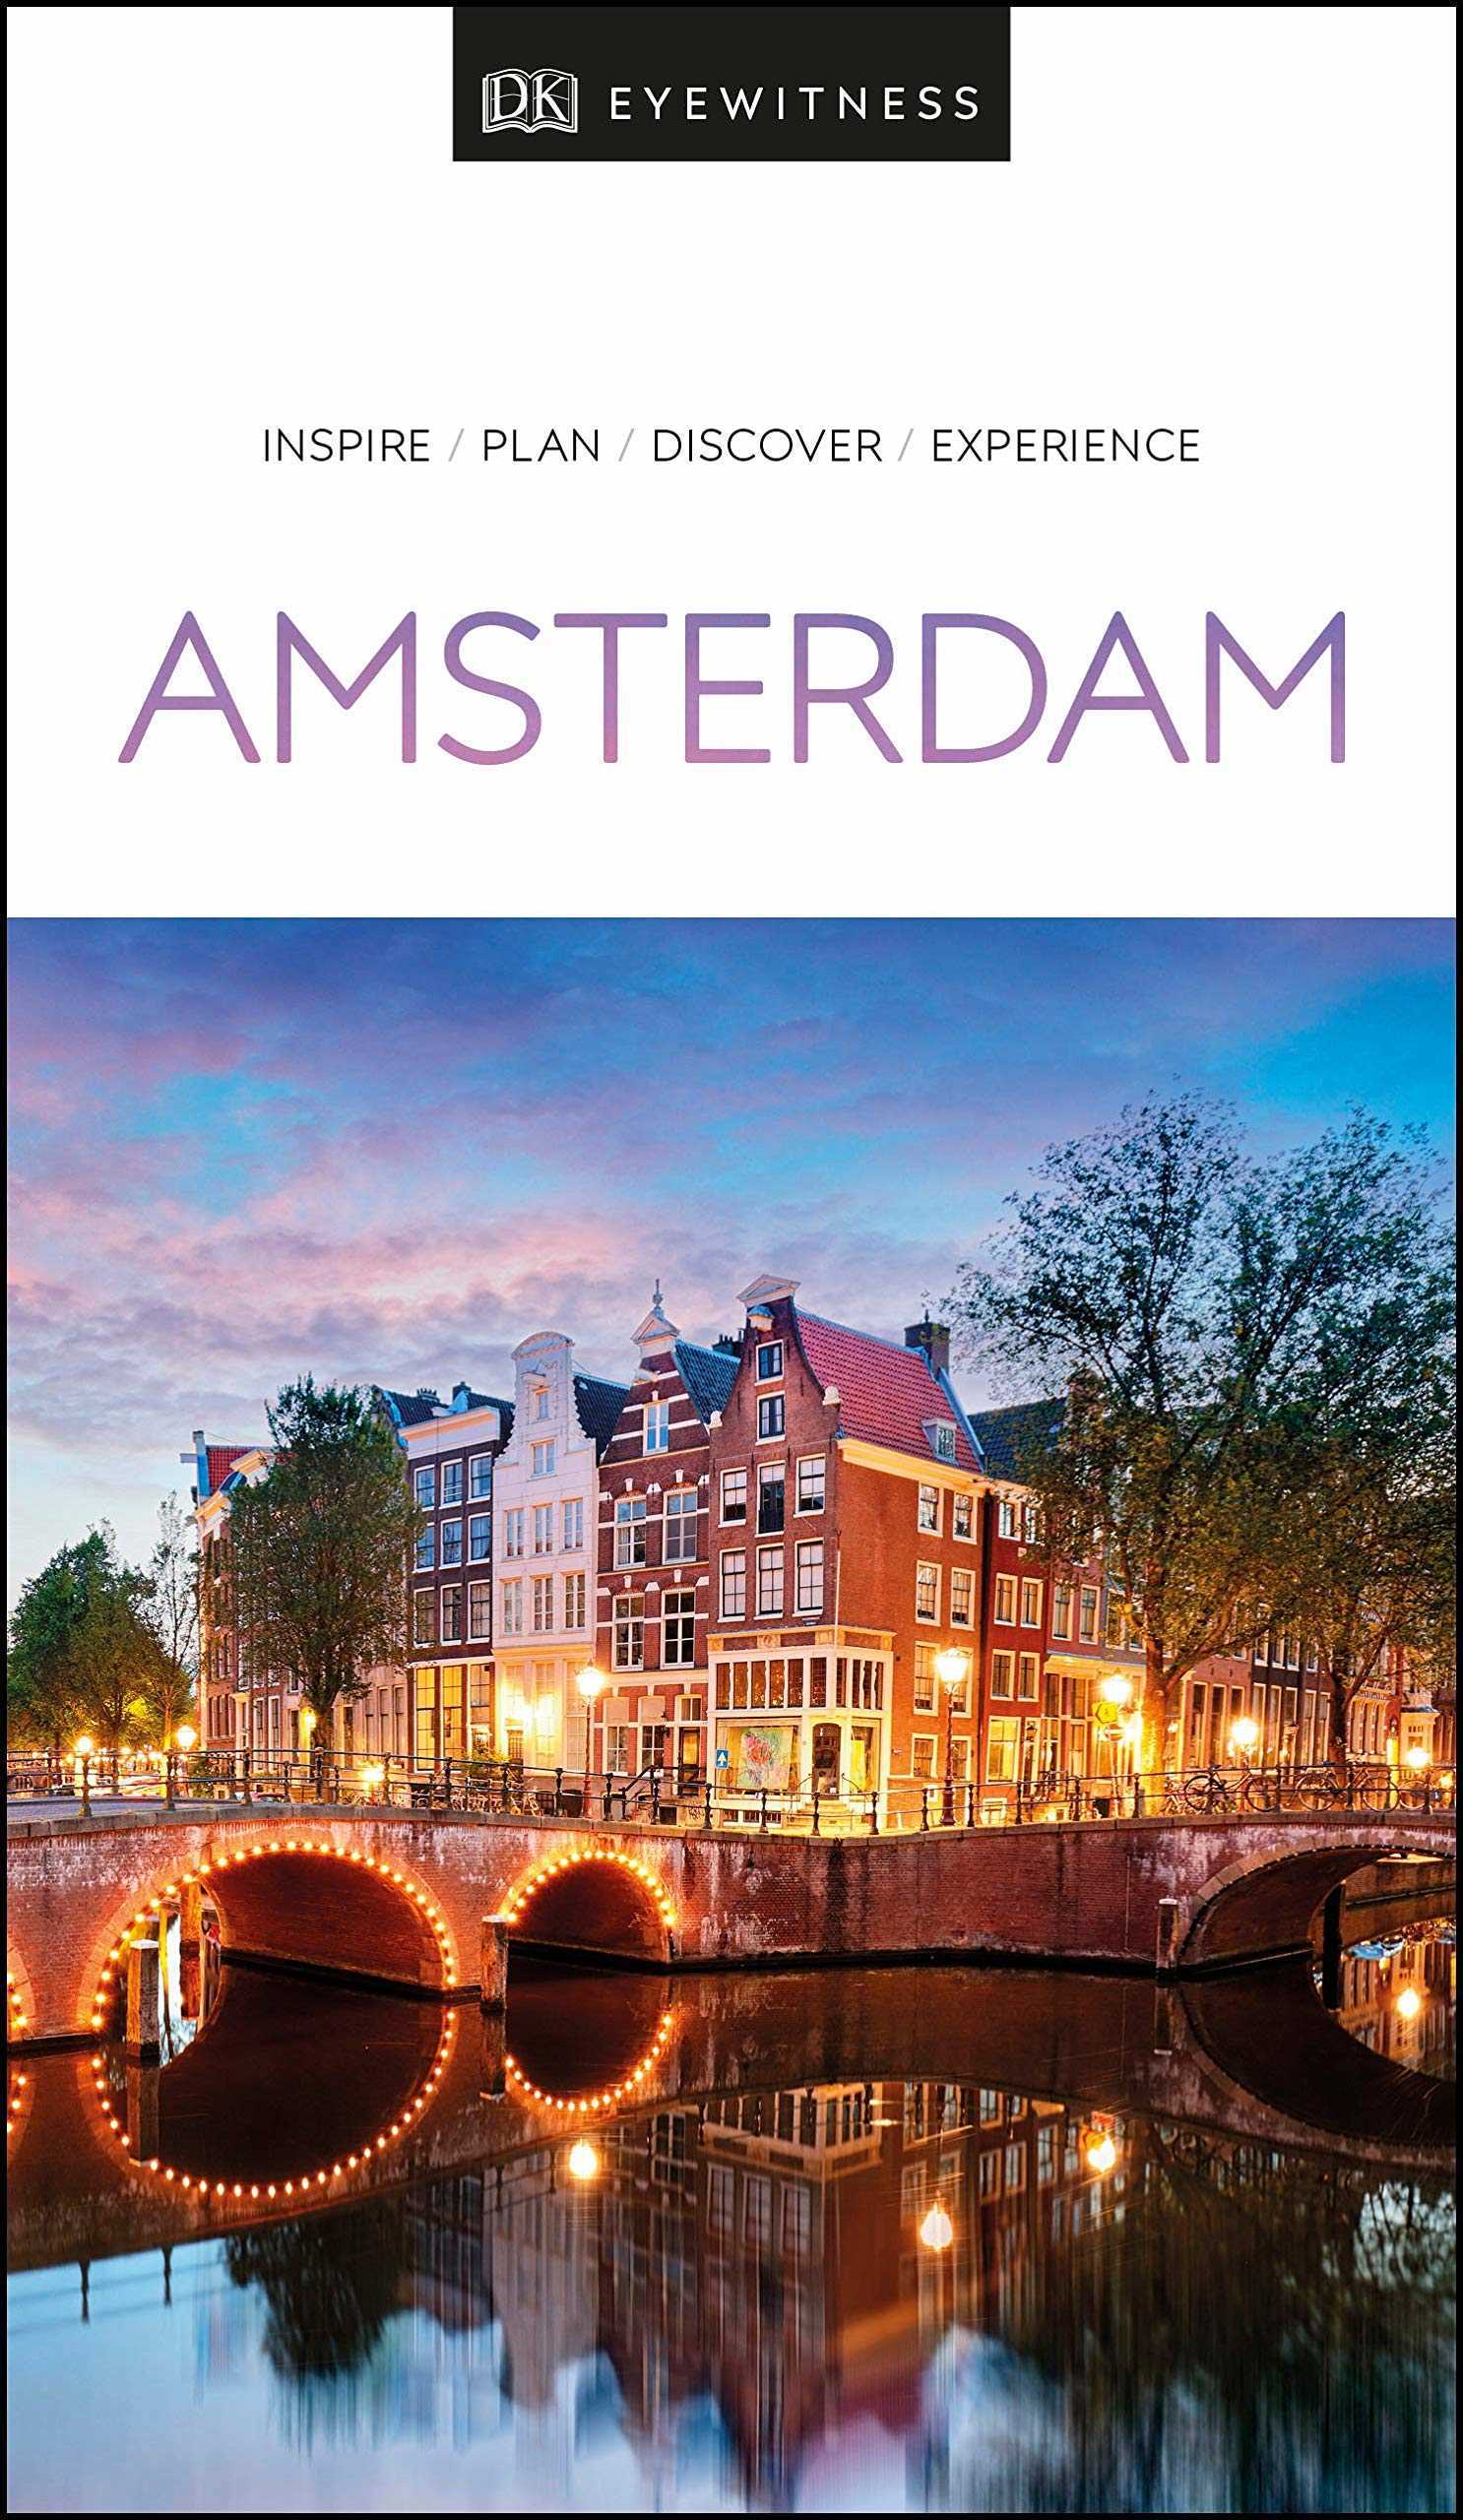 DK Eyewitness Travel Guide Amsterdam (2020 Edition)